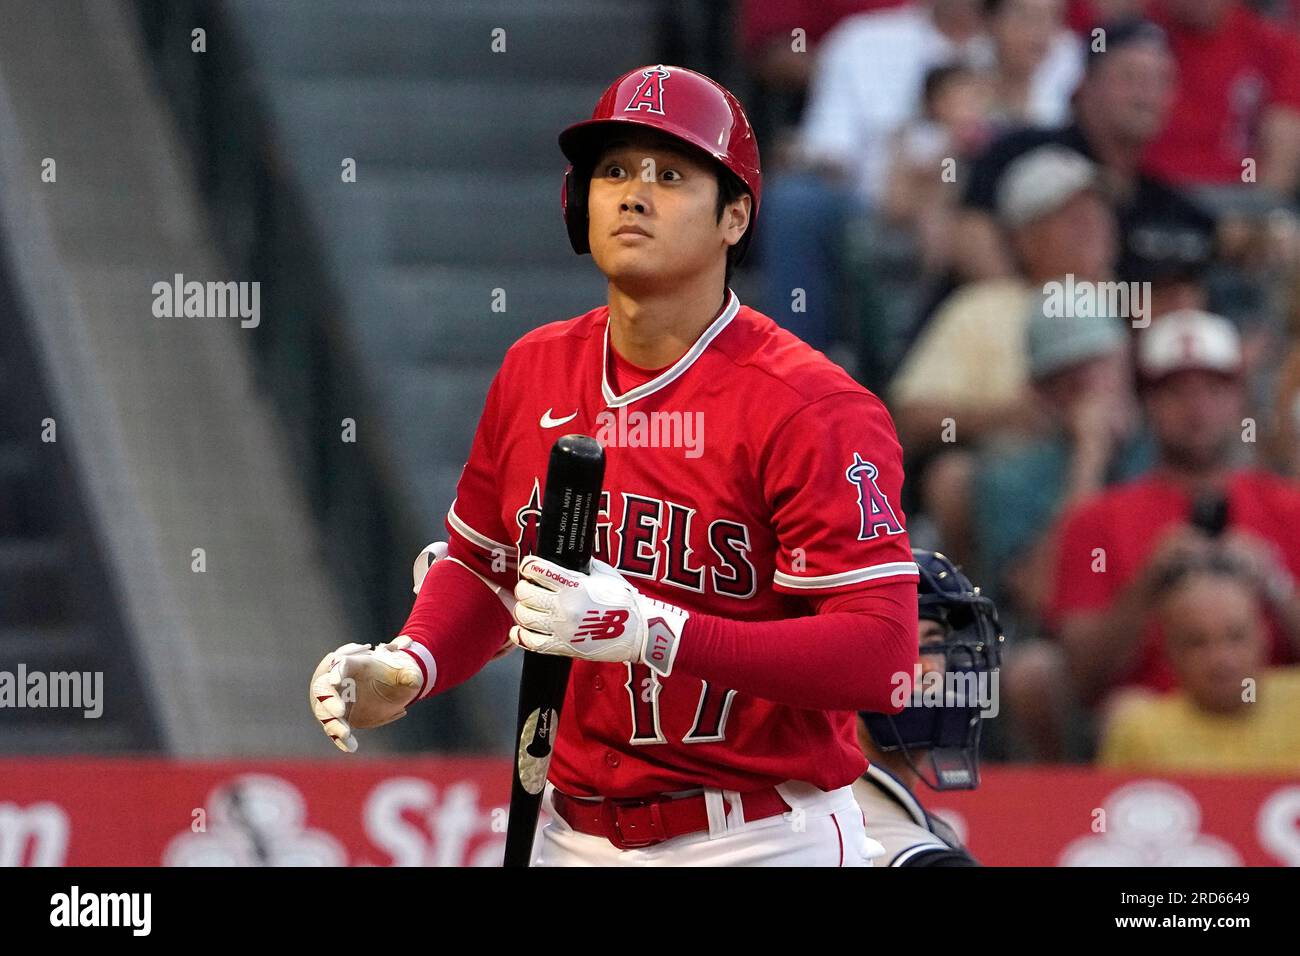 Talkin' Baseball on X: Yankees are selling Japanese Ohtani